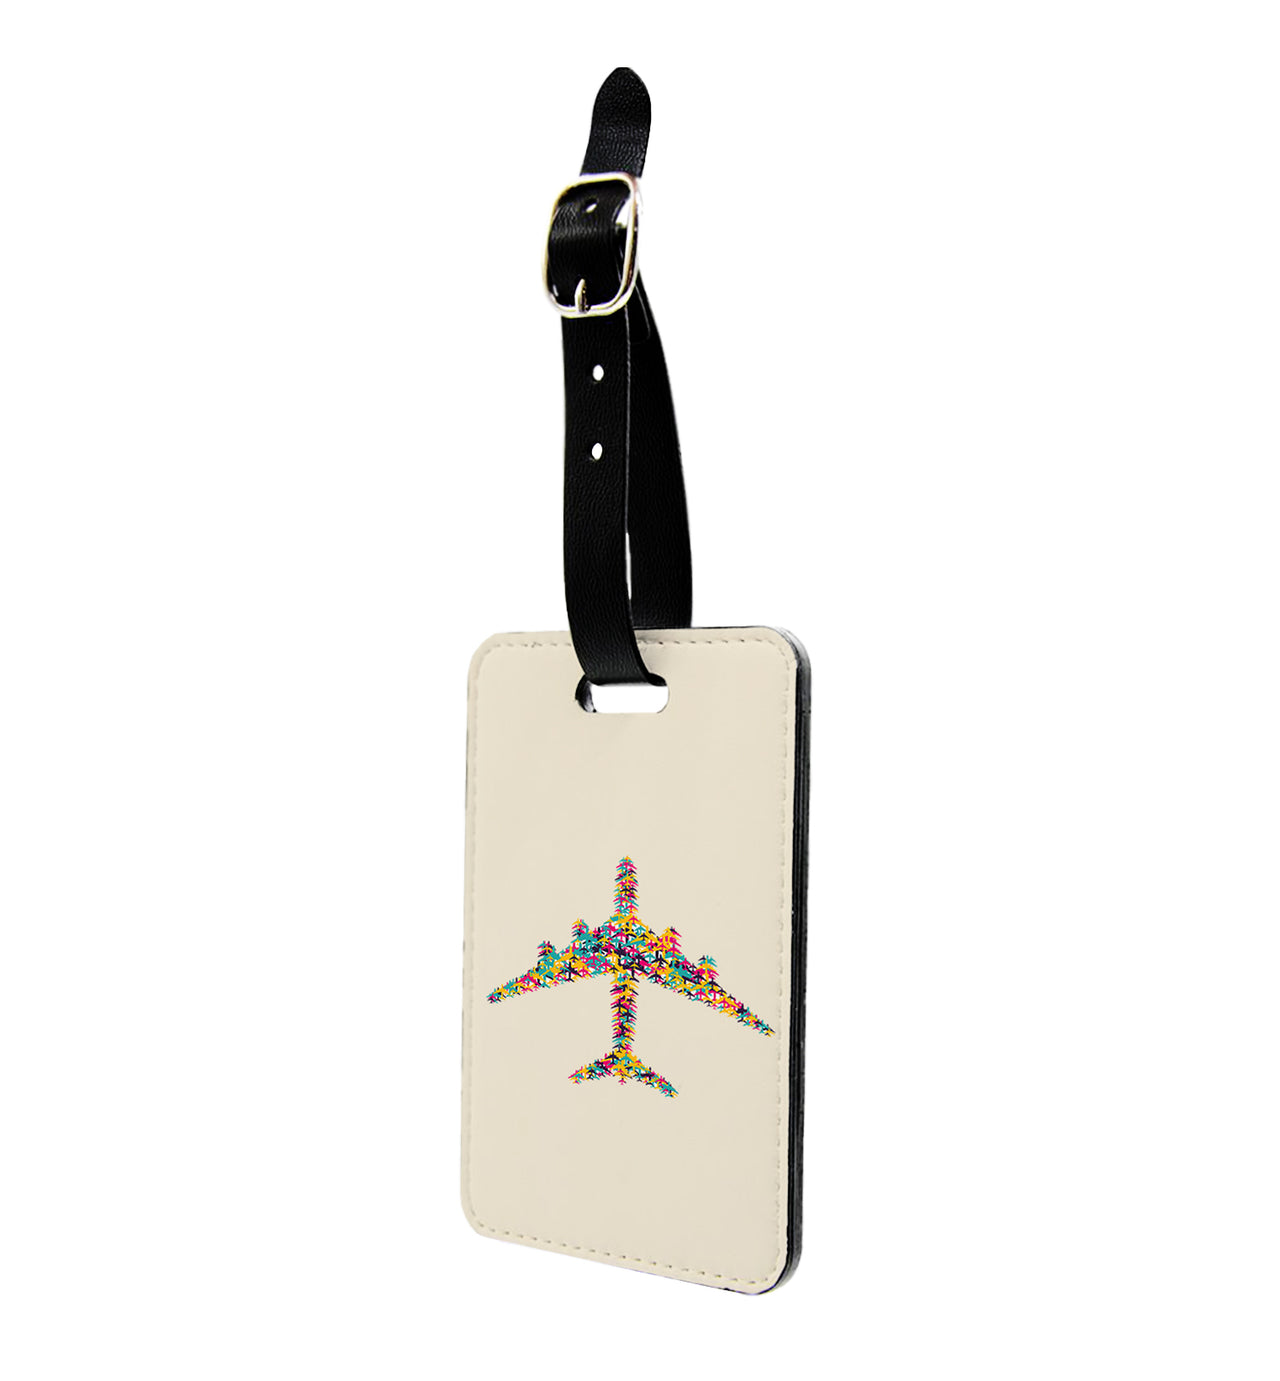 Colourful Airplane Designed Luggage Tag